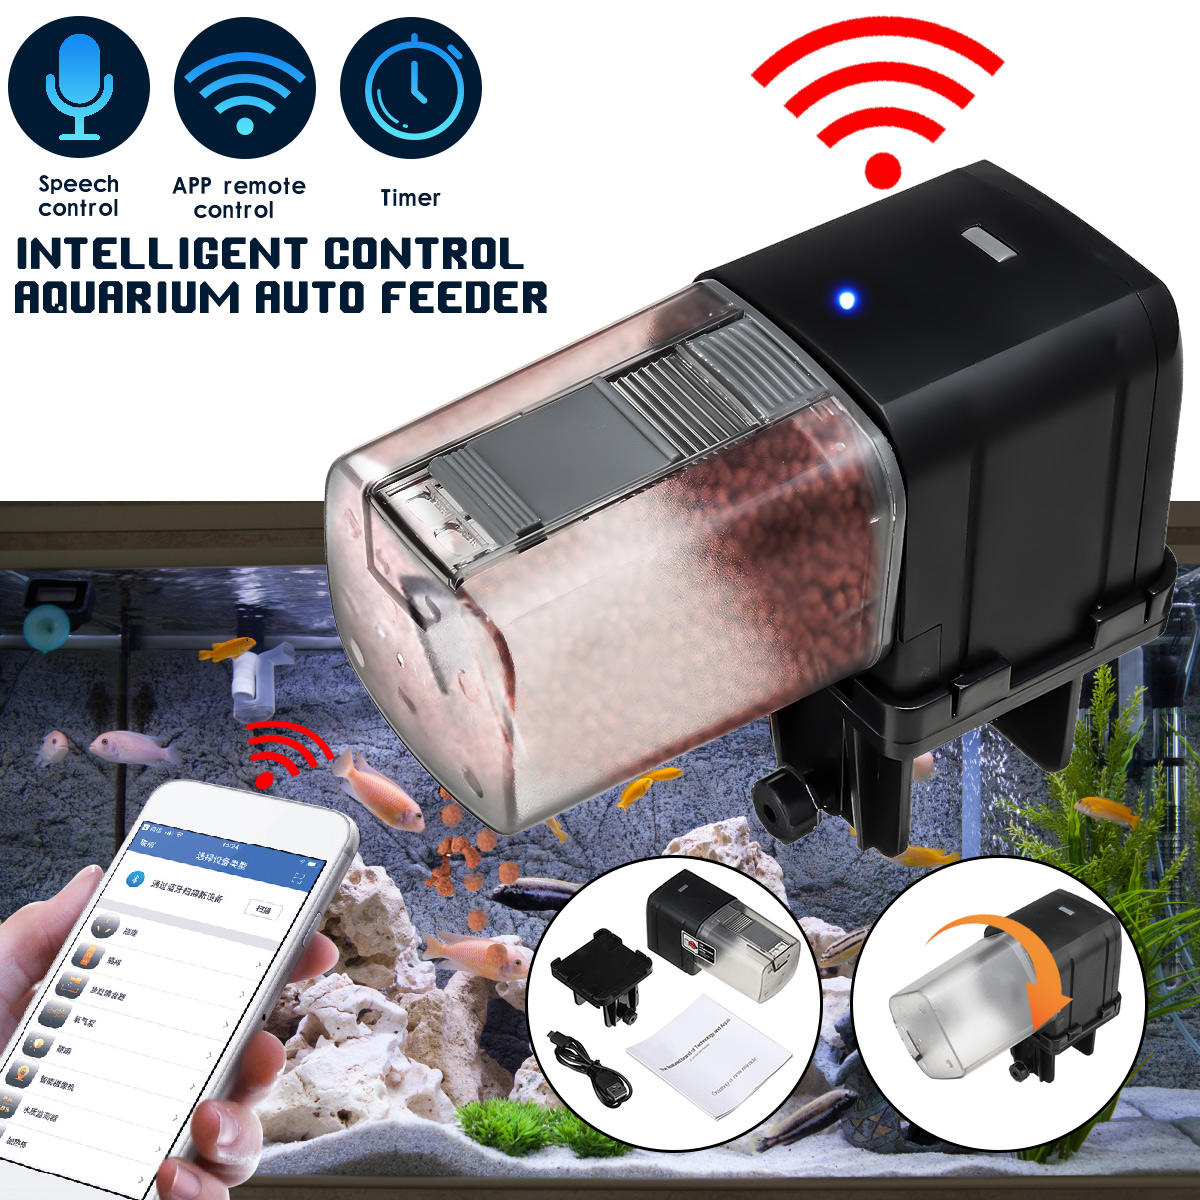 WiFi-Intelligent-Aquarium-Auto-Feeder-Timer-Speech-Control-Fish-Tank-Pond-Food-Dispenser-1371354